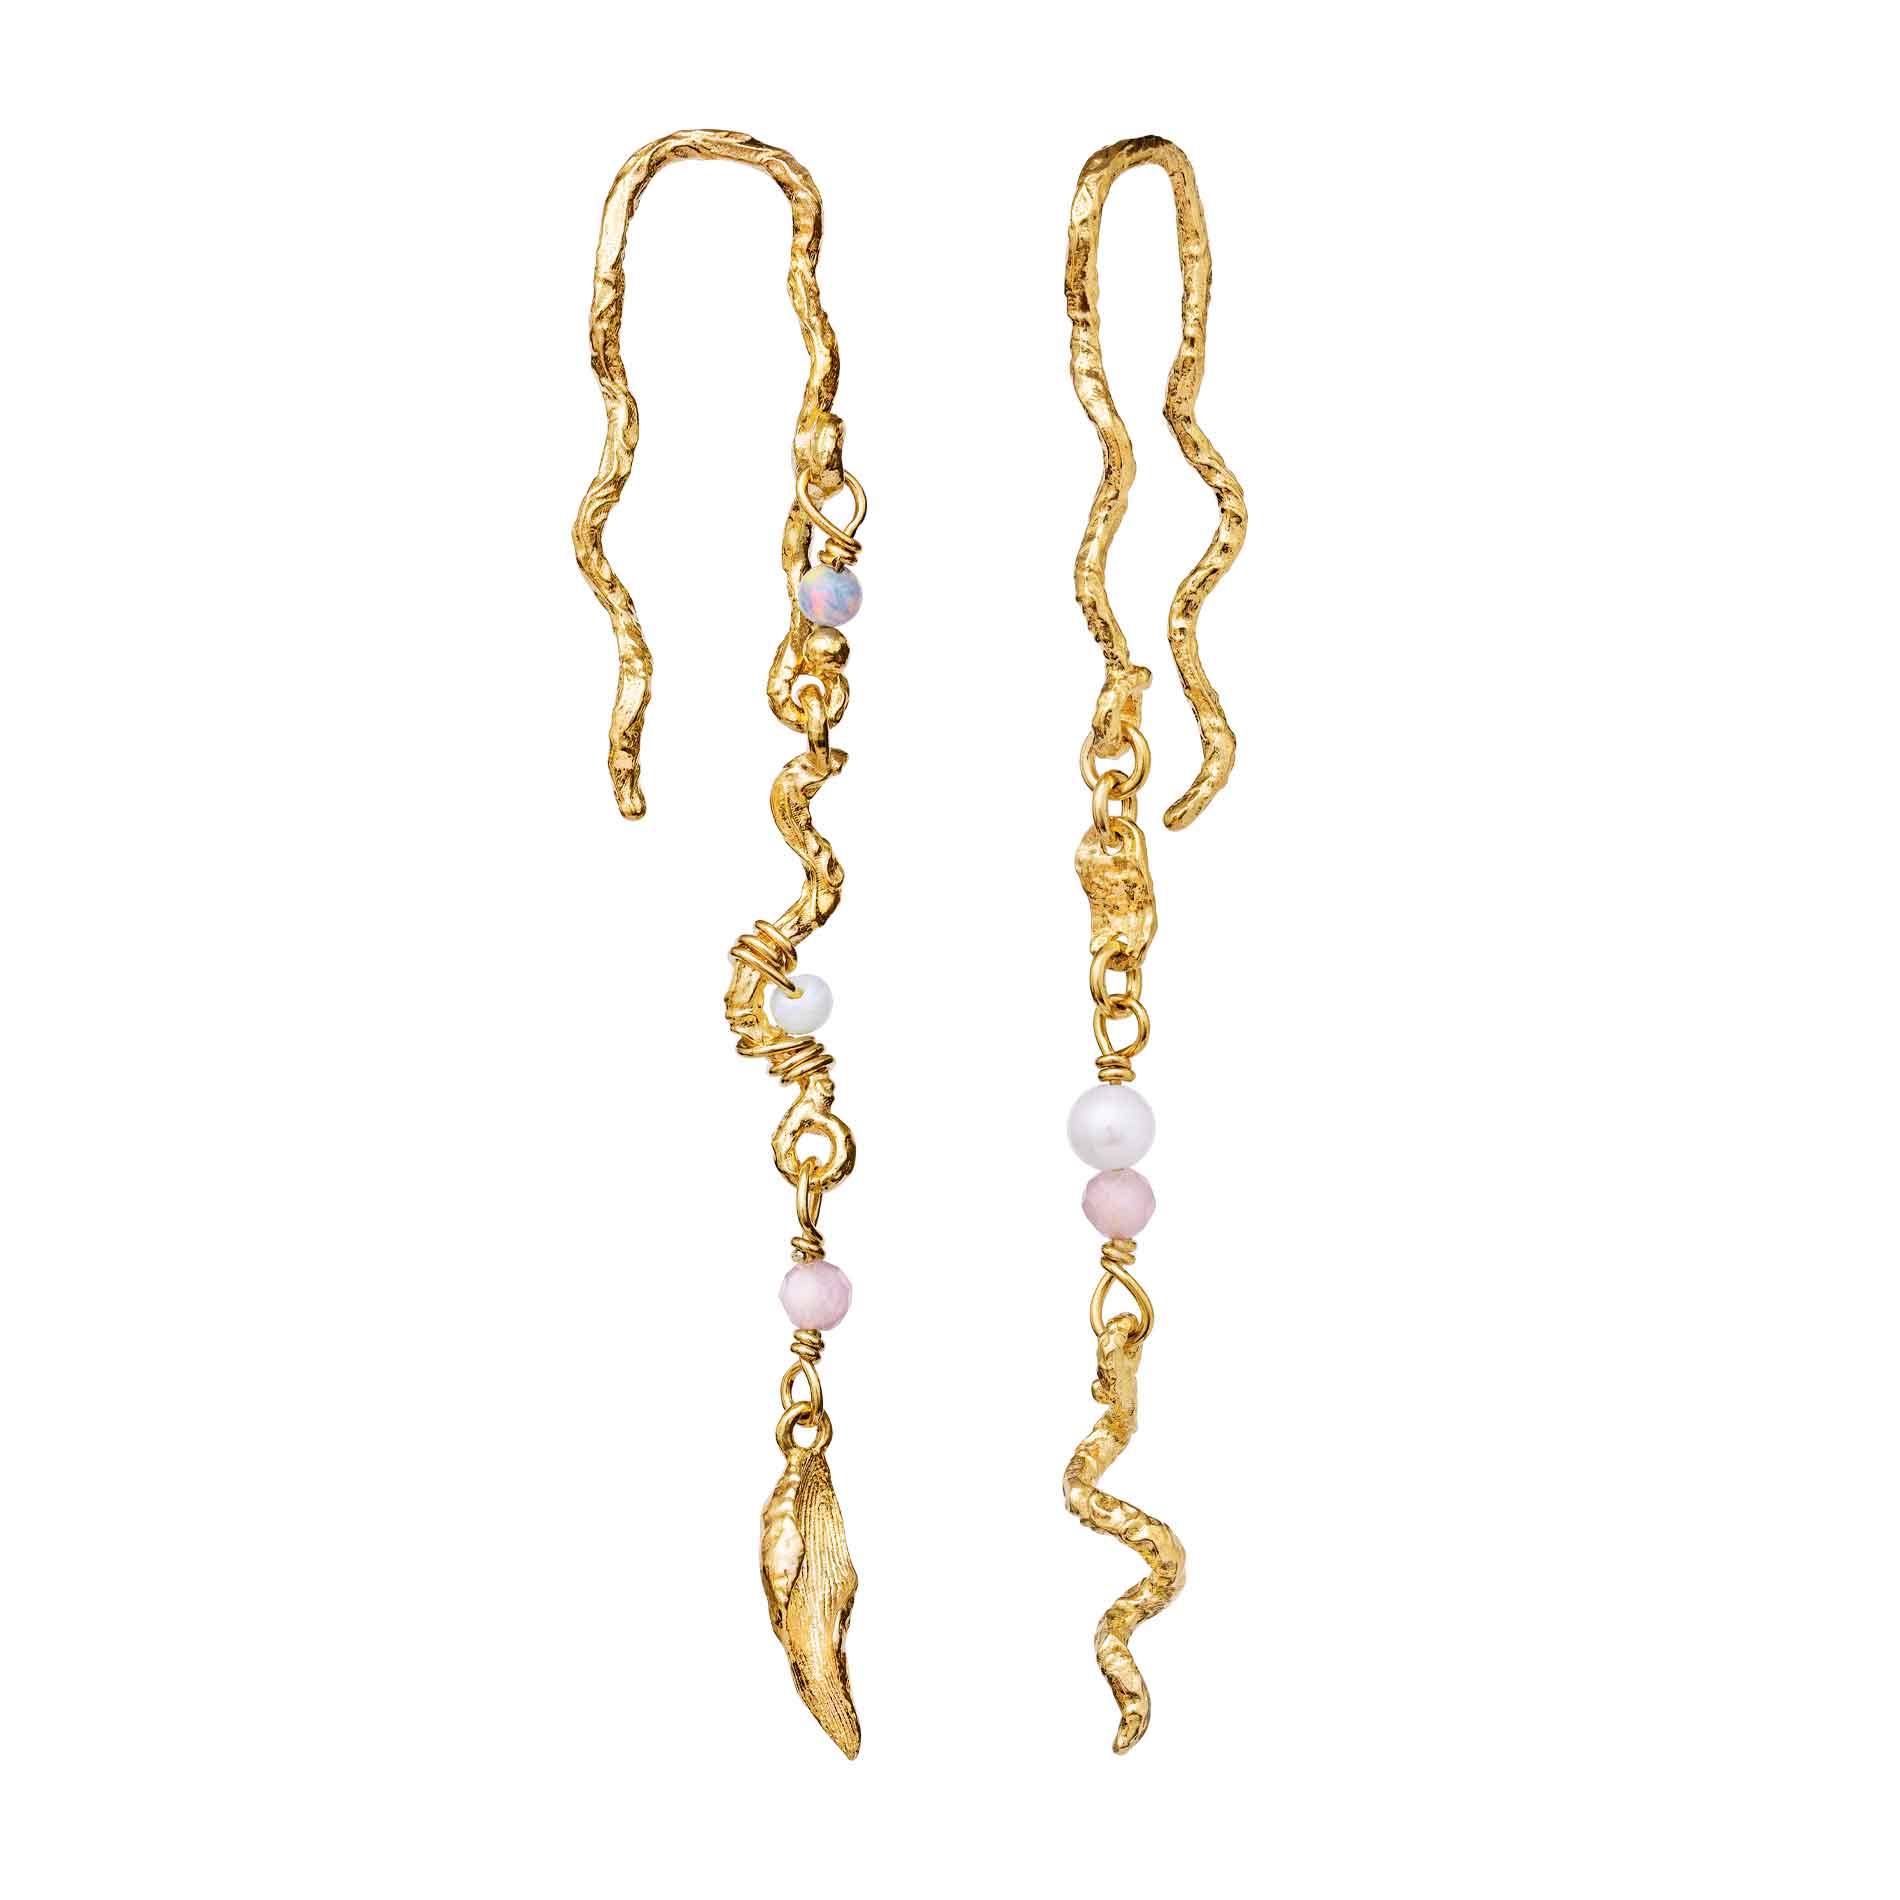 Forgyldte ørebøjler fra Mannesten i bølget design med perler, opal og akvamarin